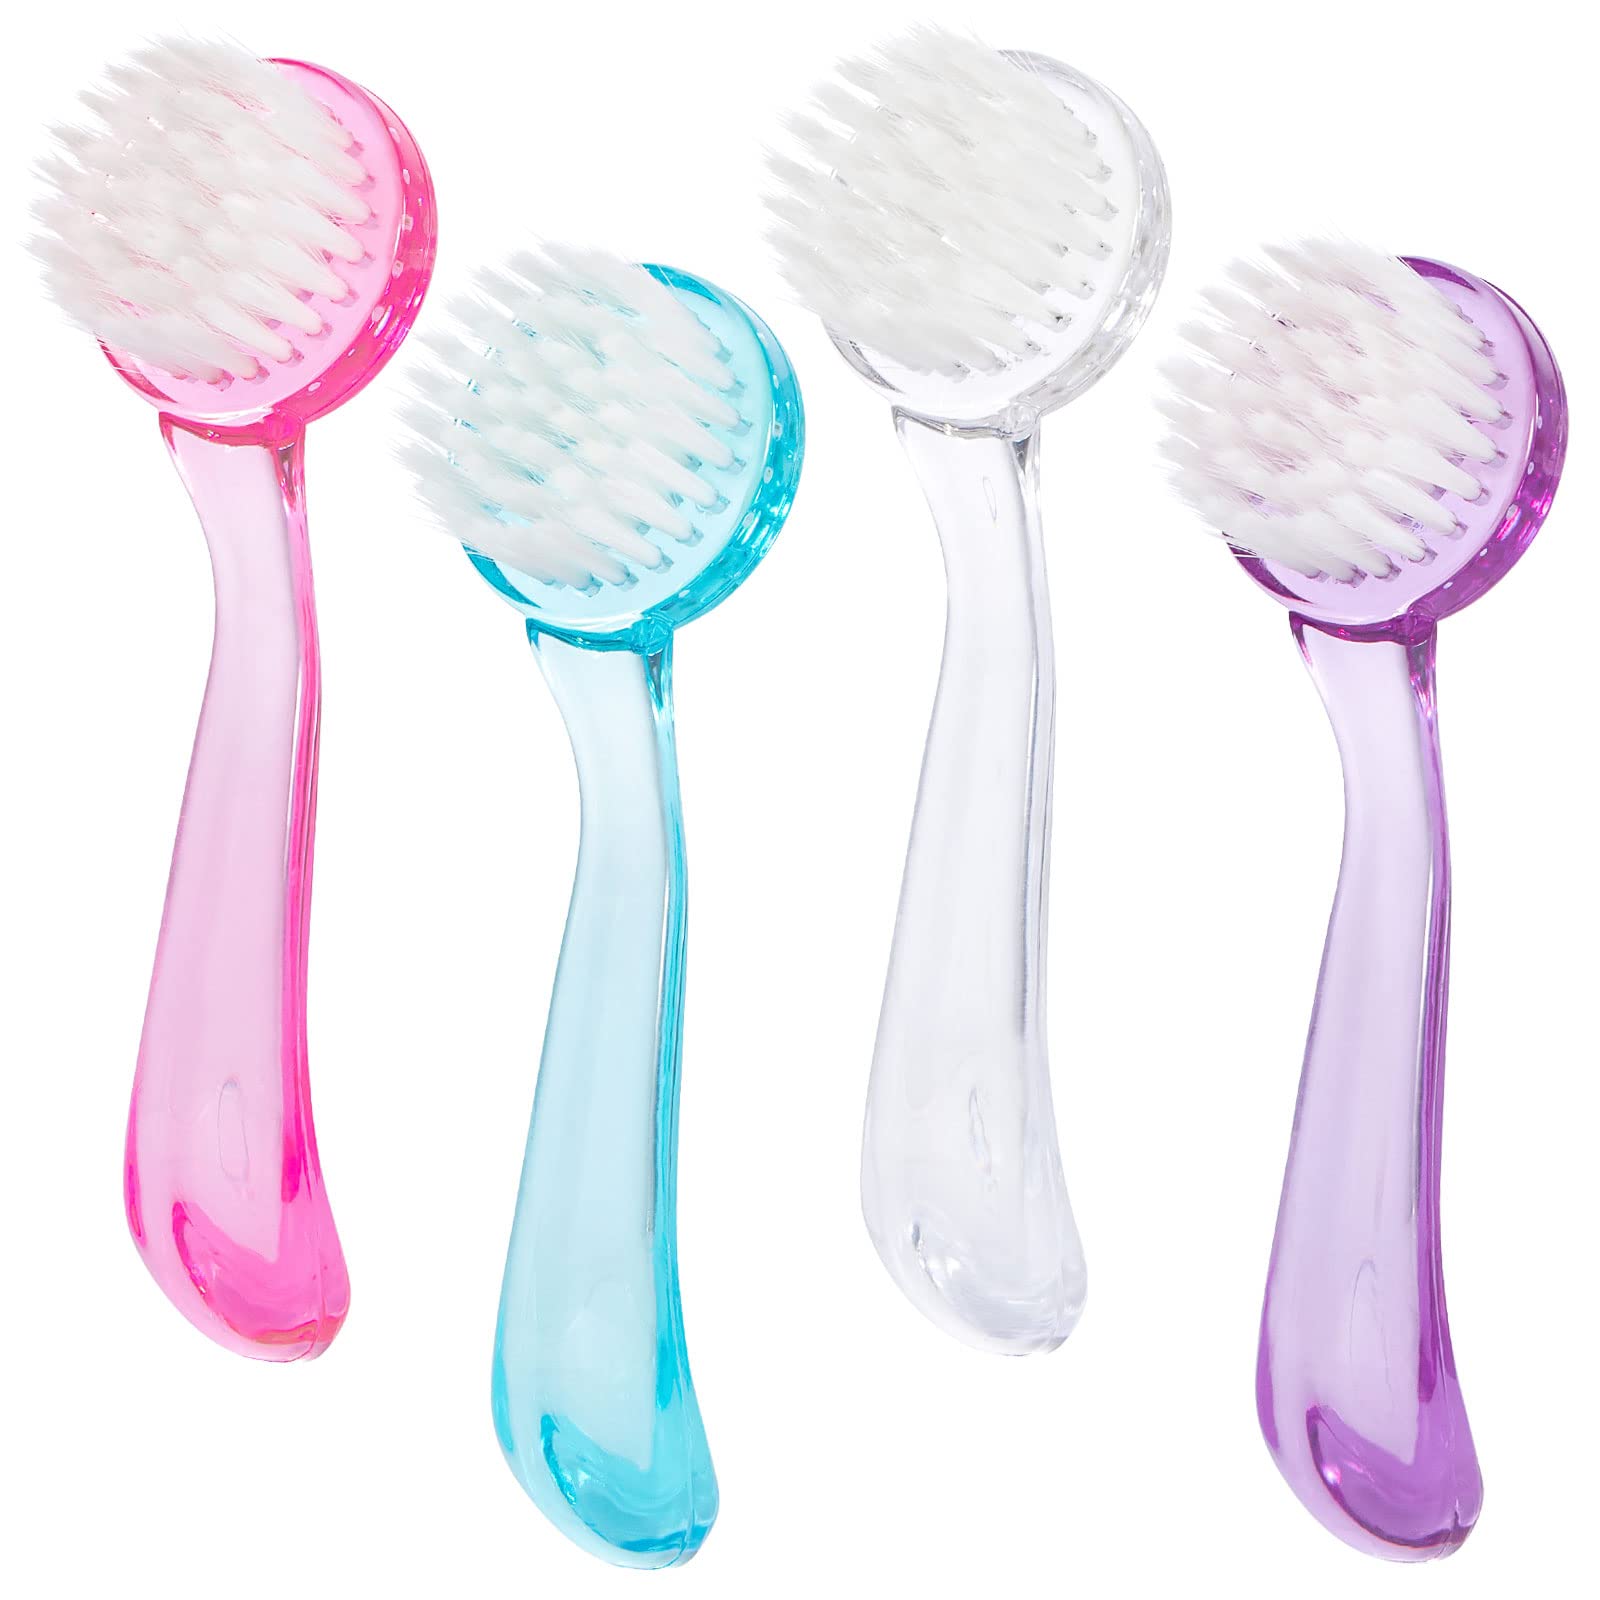 Glossmetics So Fresh, So Clean, Dual Facial Cleansing Brush - Face Cleansing Exfoliating Brush, Manual Facial Cleansing Brush, Face Washing Brush, for